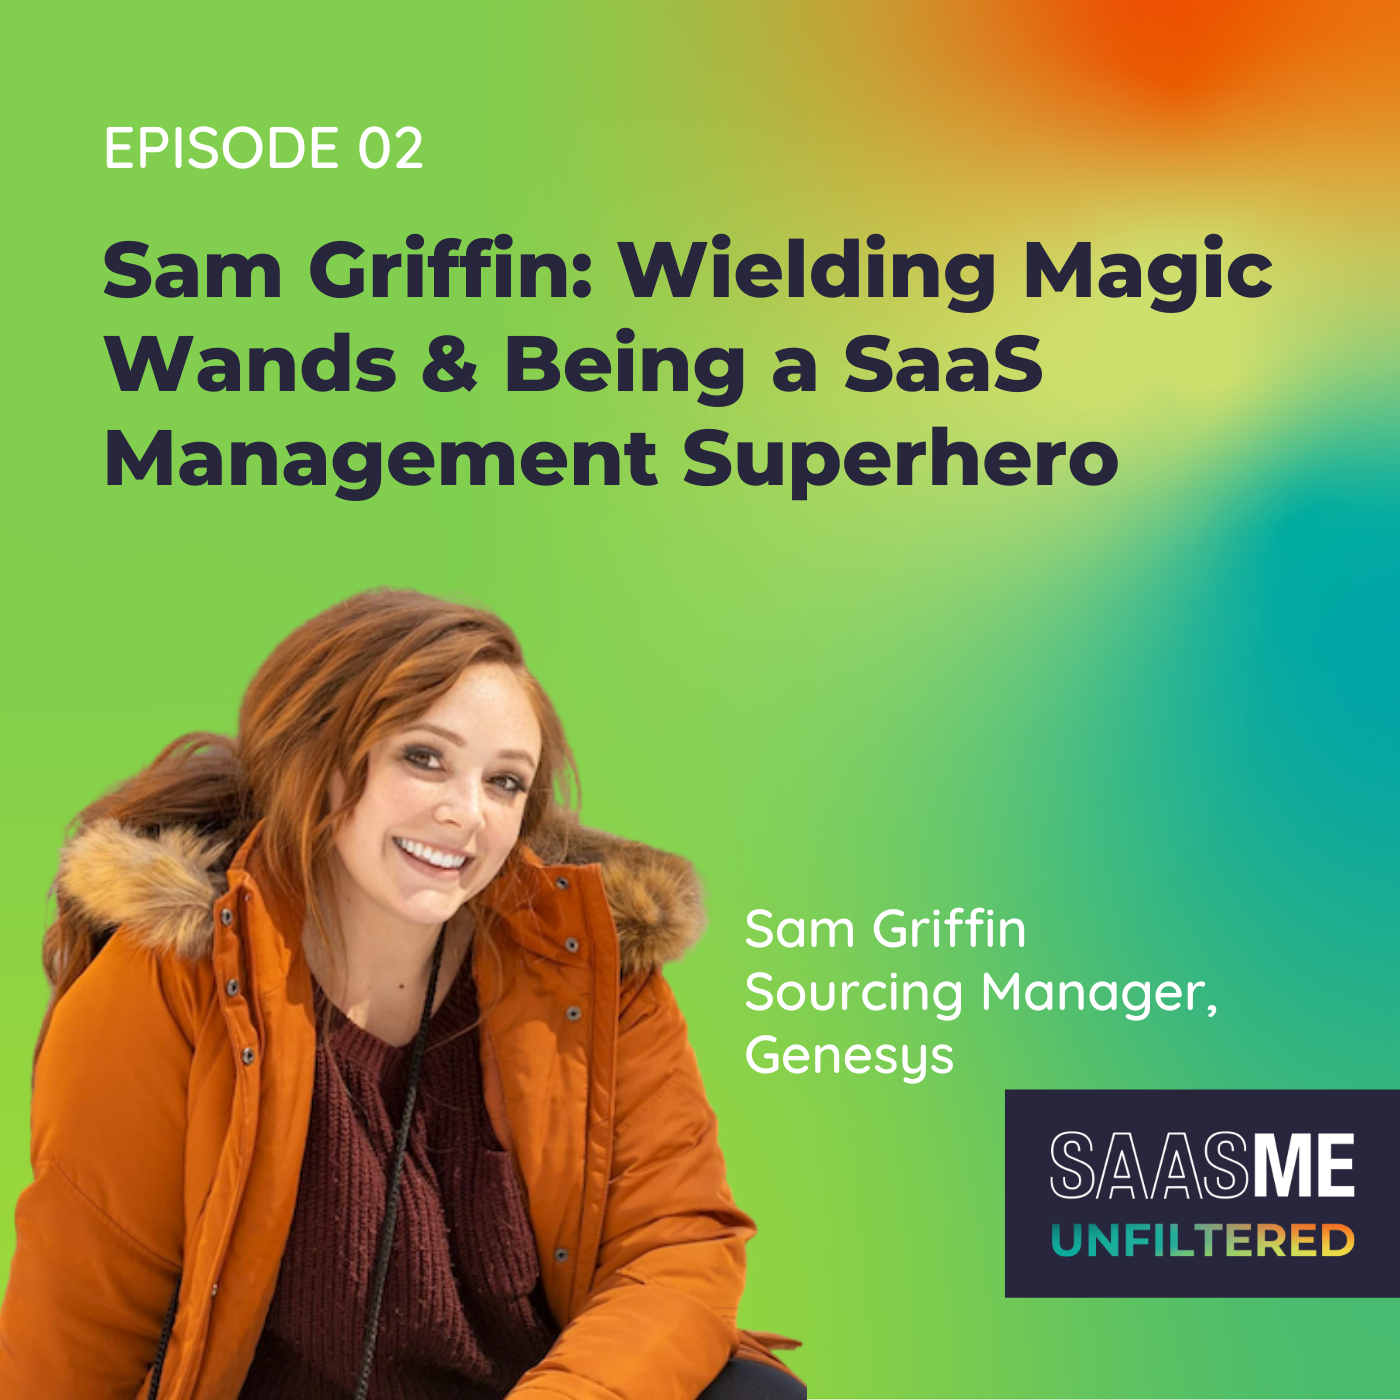 Sam Griffin: Wielding Magic Wands & Being a SaaS Management Superhero